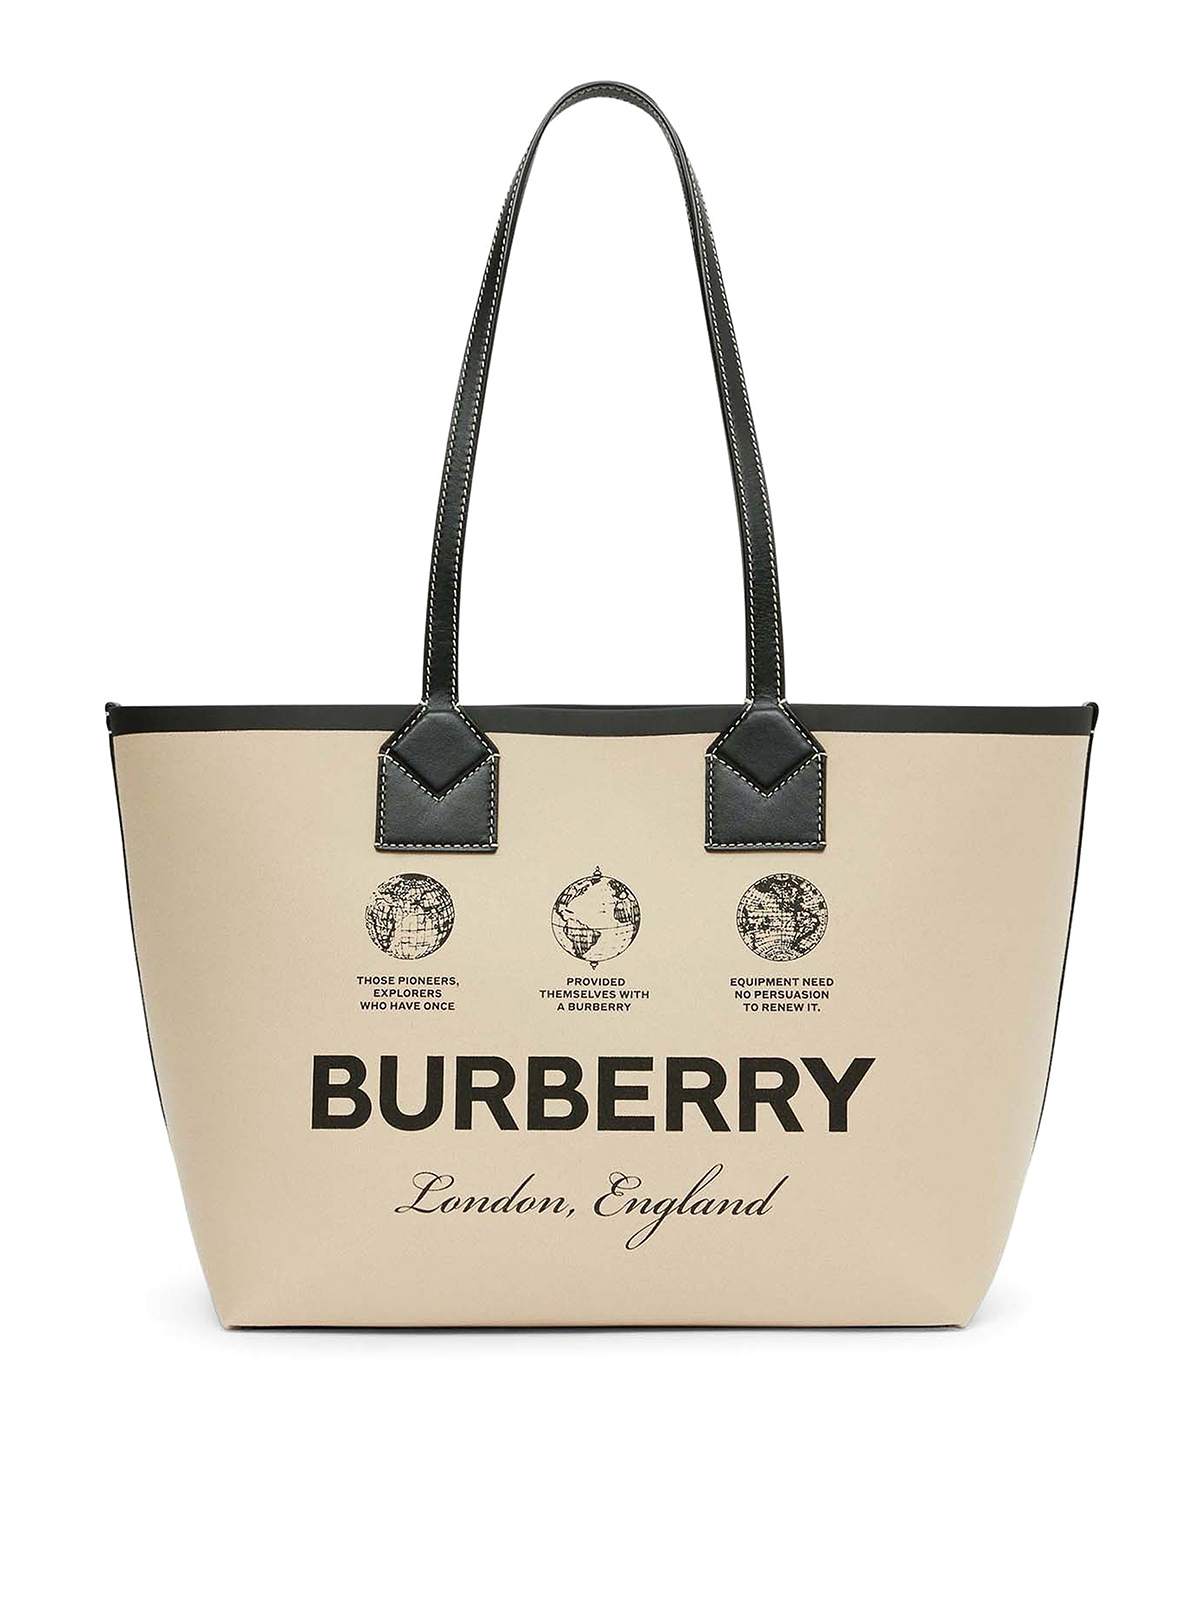 BURBERRY Logo Nova Check Shoulder Bag Leather Beige Brown Made in Italy  02HB051 | eBay